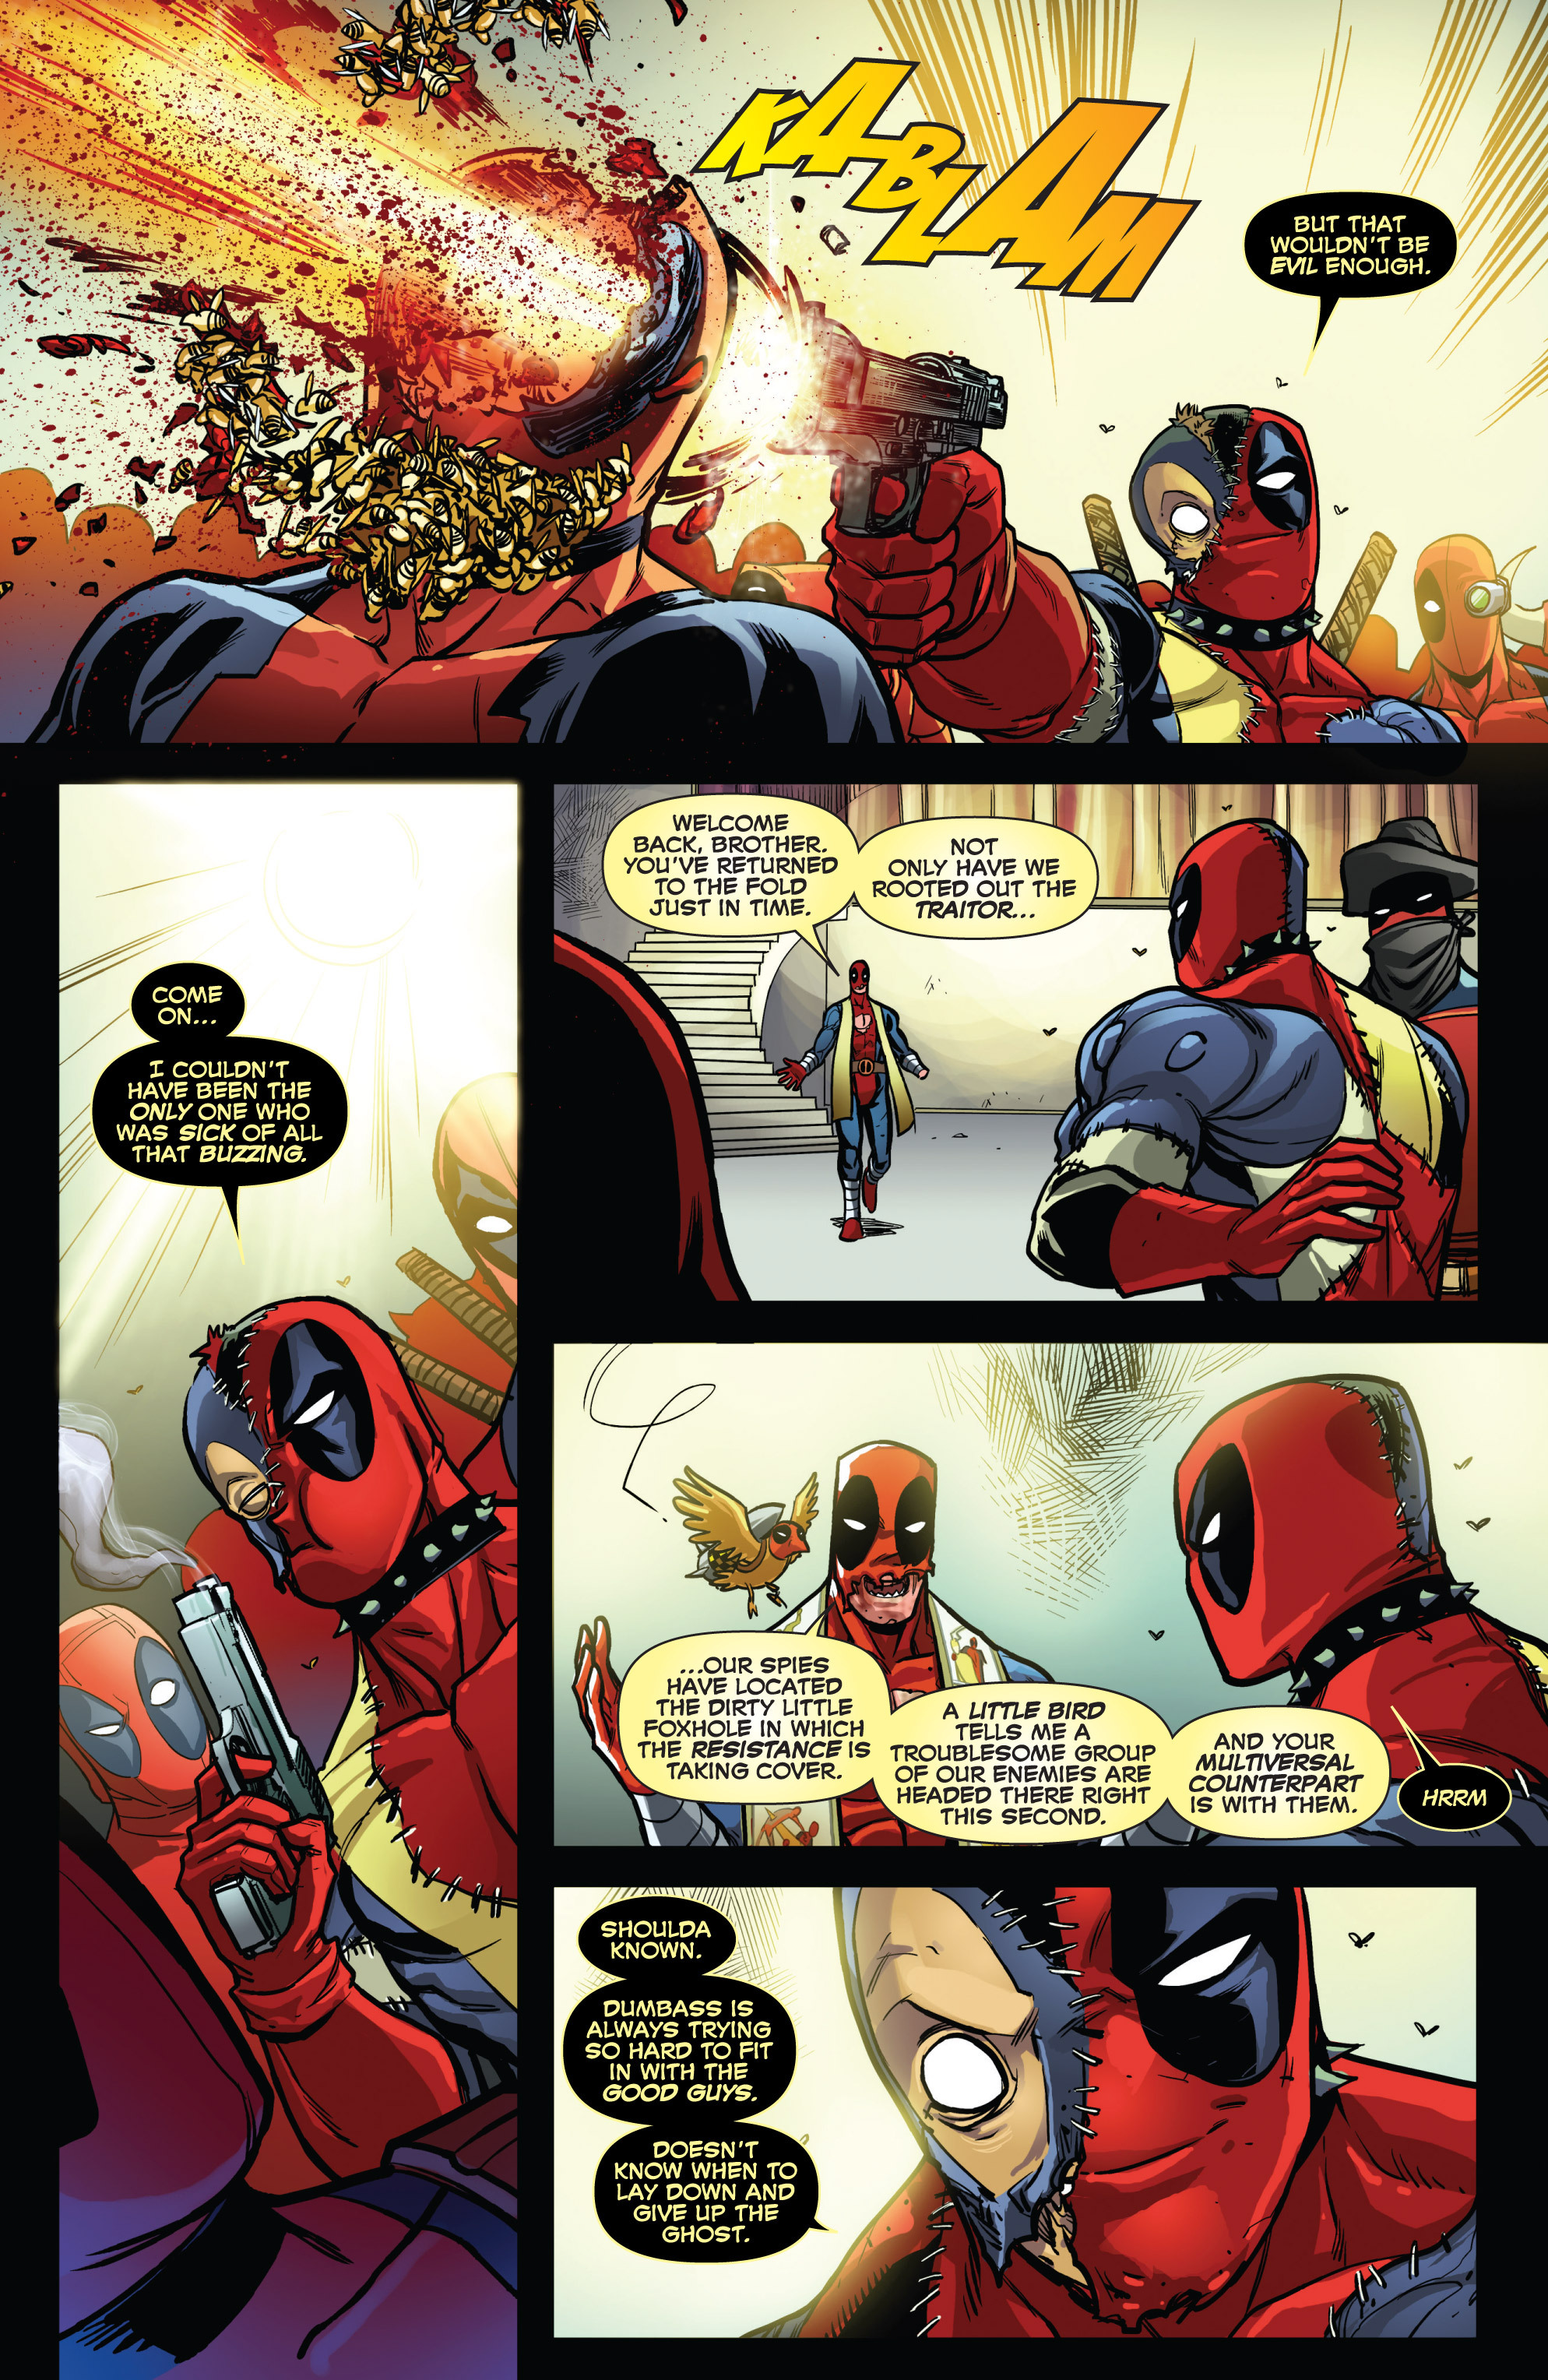 Deadpool Kills Deadpool Issue 2 Viewcomic Reading Comics